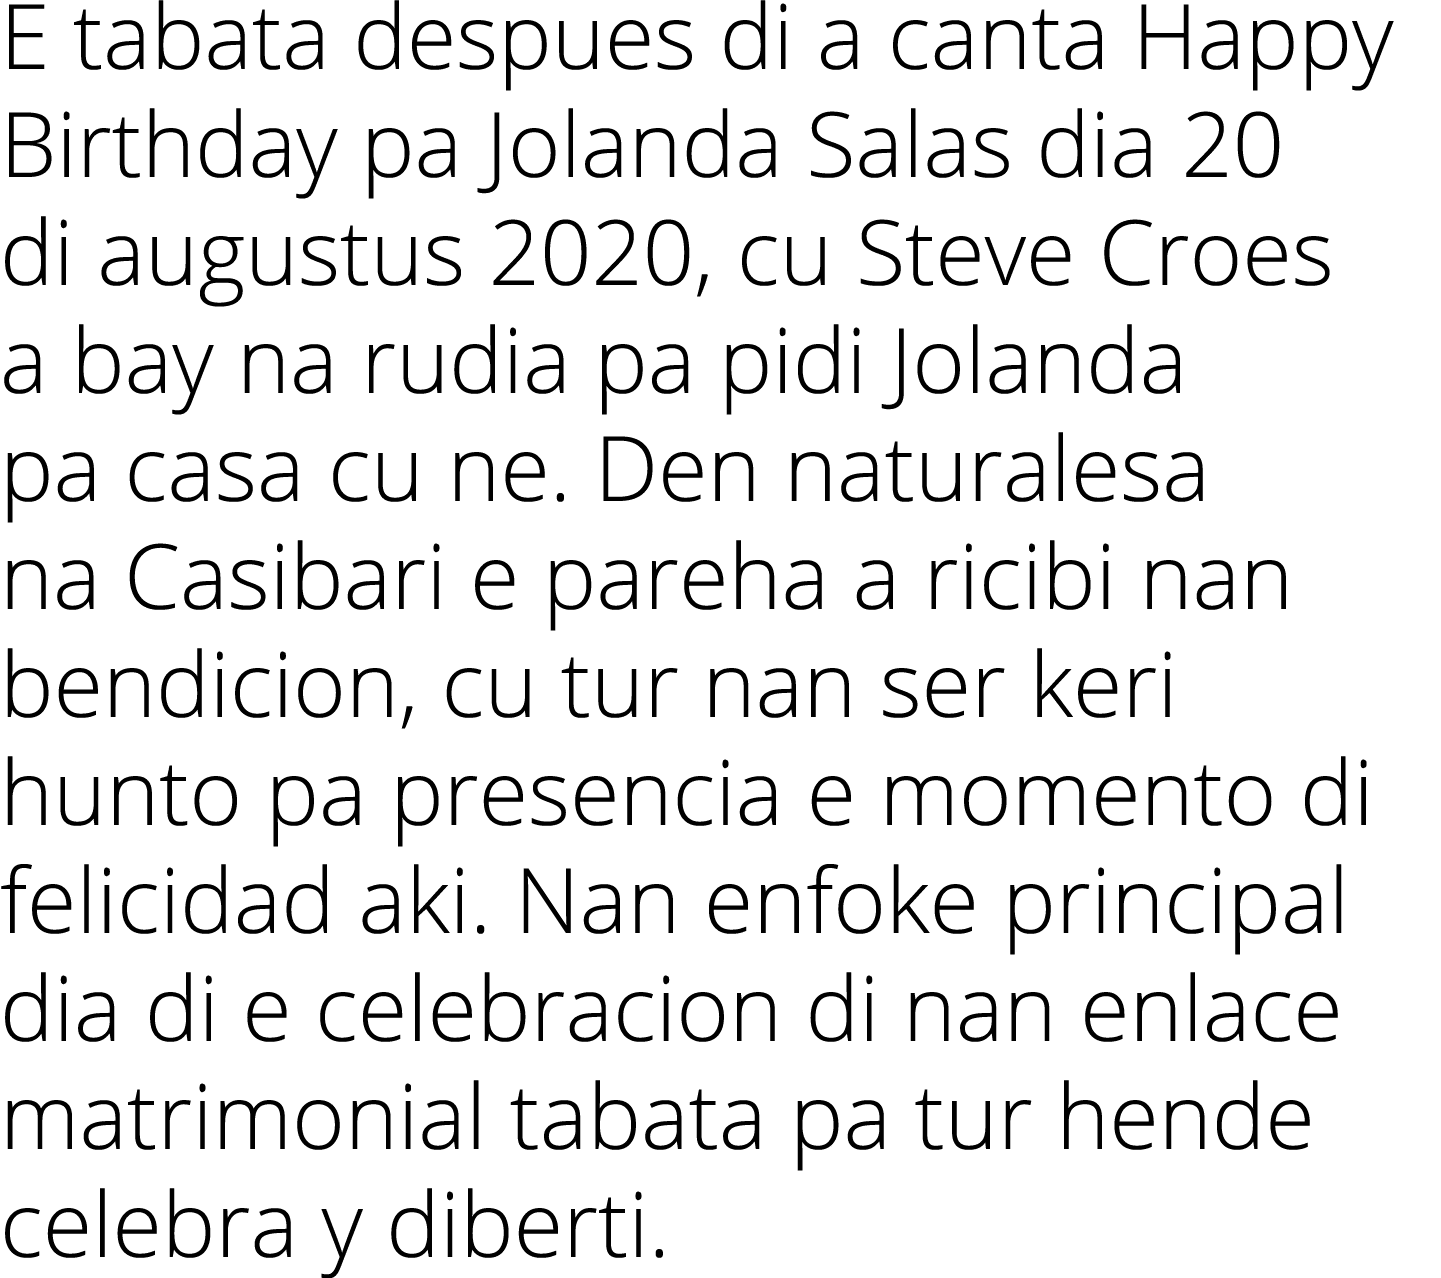 E tabata despues di a canta Happy Birthday pa Jolanda Salas dia 20 di augustus 2020, cu Steve Croes a bay na rudia pa   